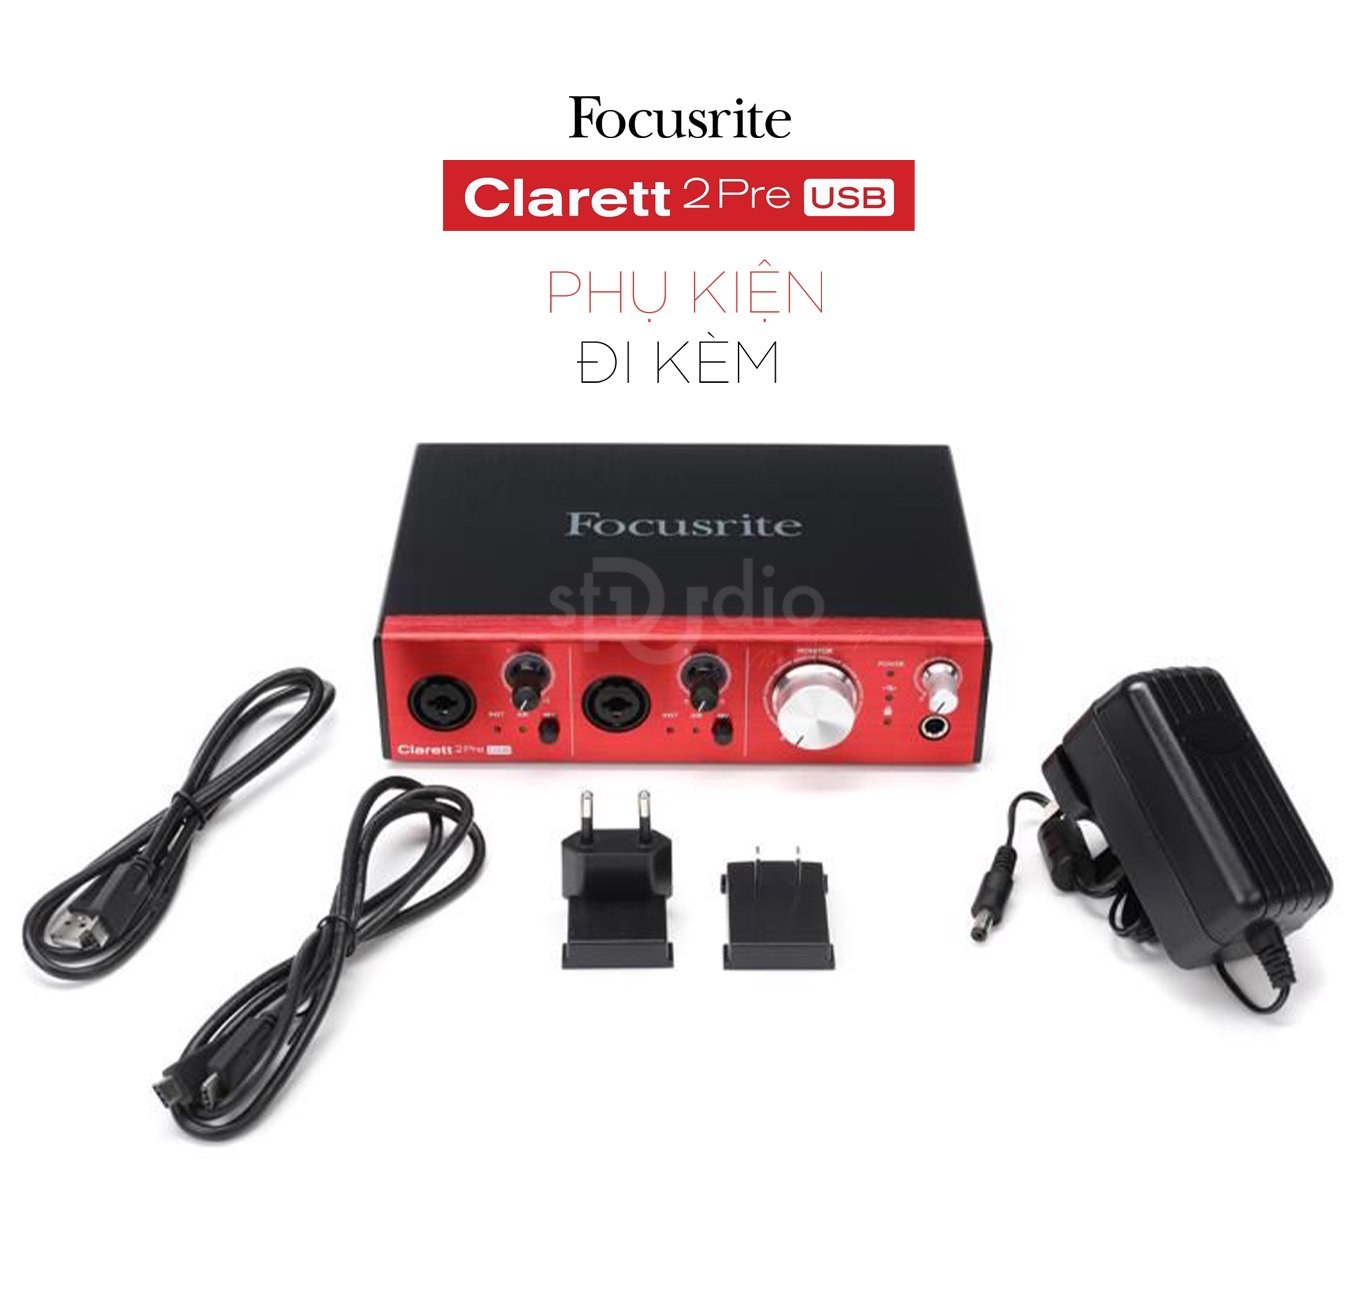 Soundcard Focusrite Scarlett 2Pre USB - Interface thu âm cao cấp